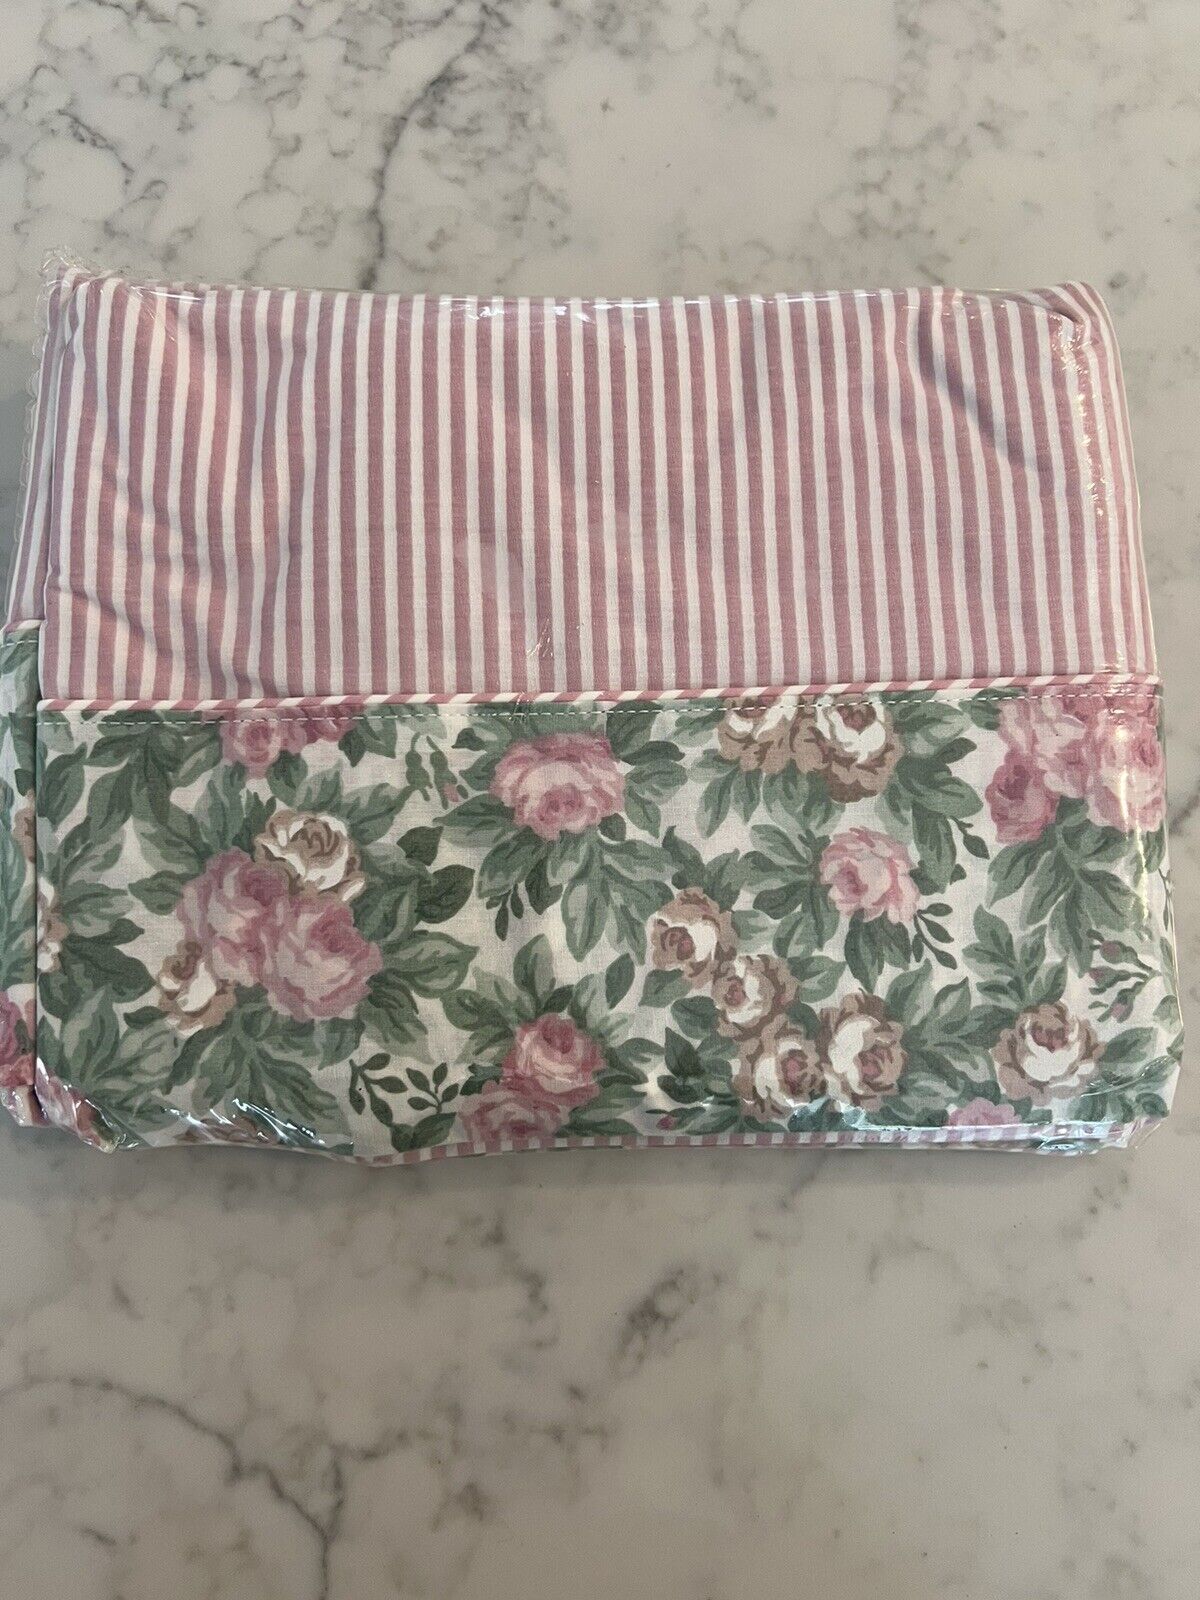 New Vintage Full Size Pink Floral & Striped Flat Sheet irregular